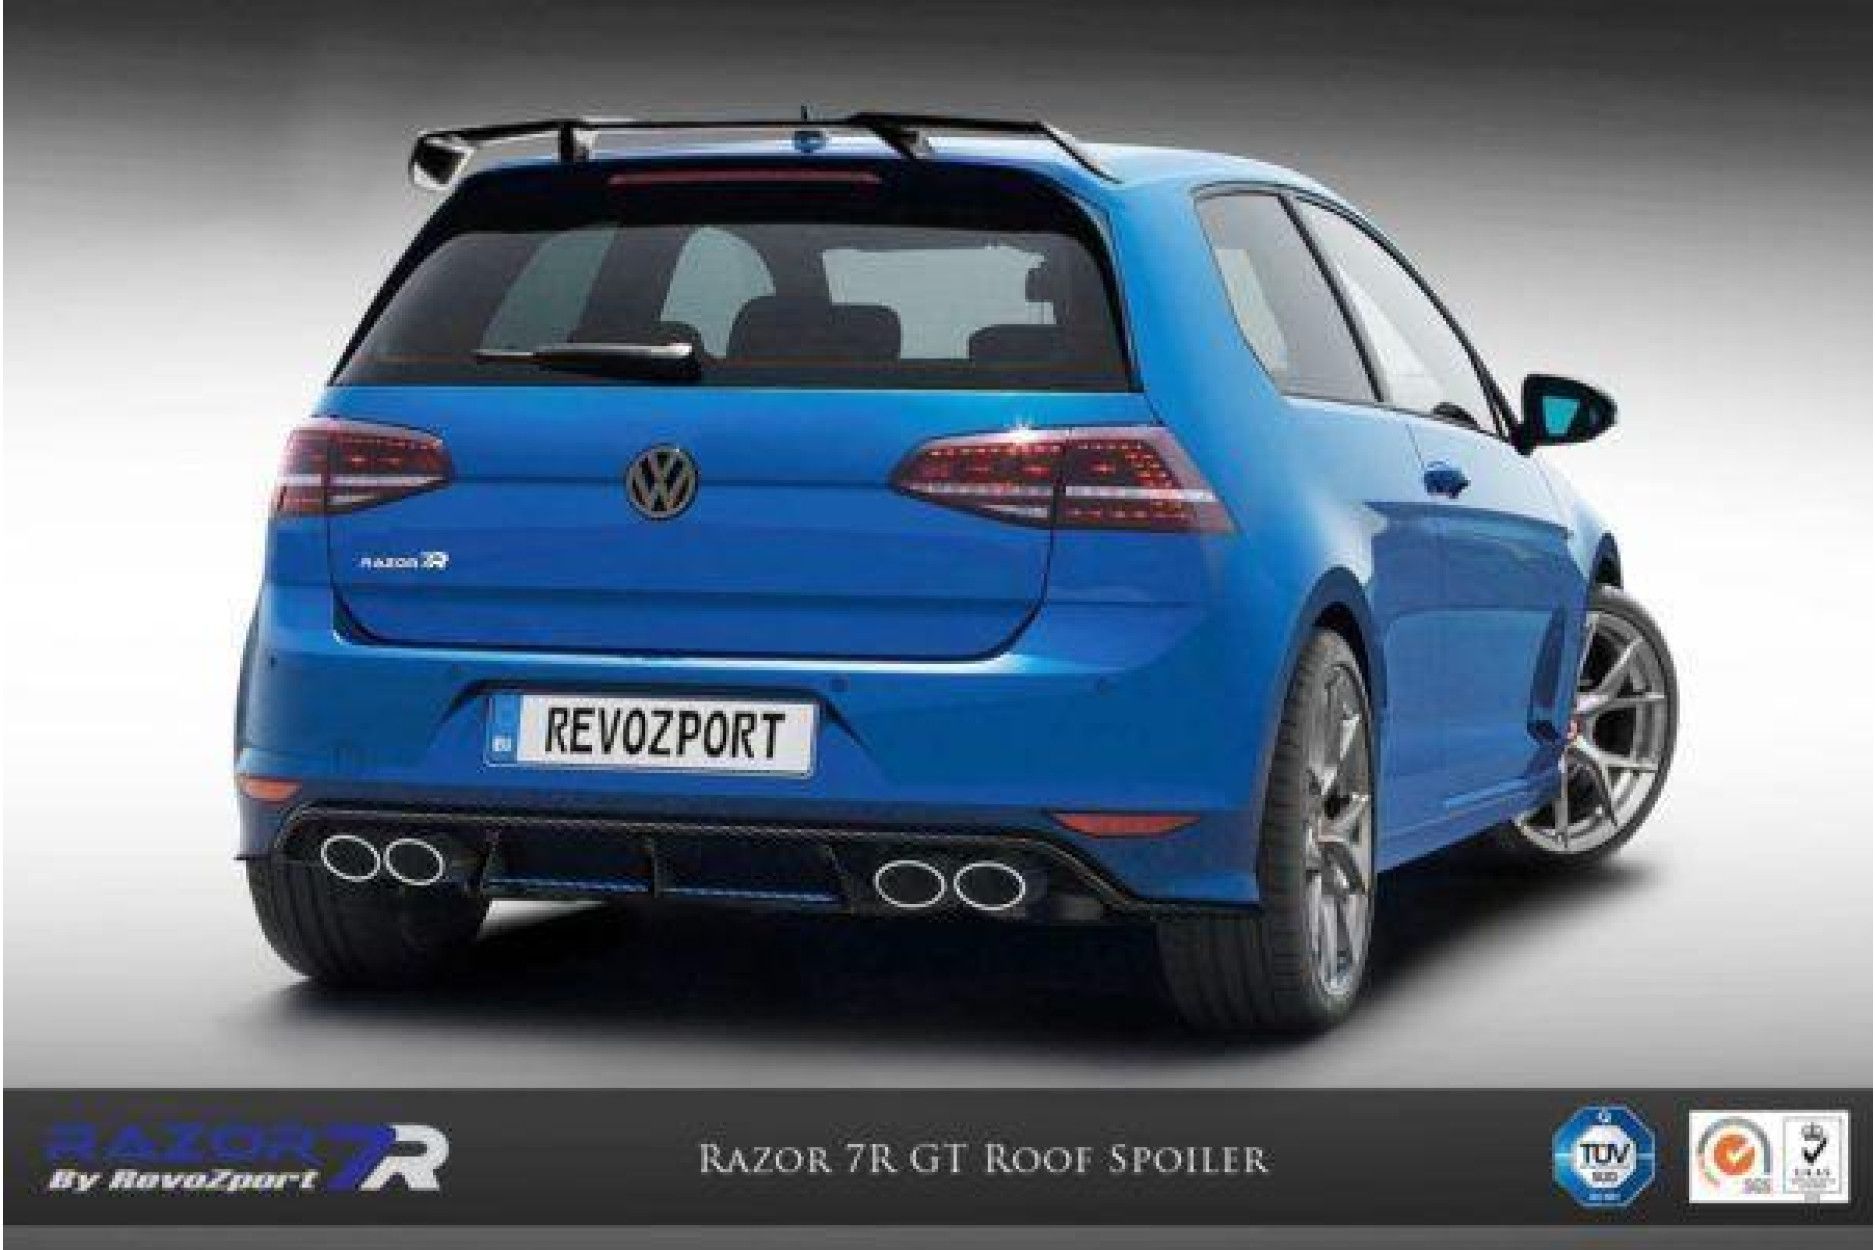 RevoZport Carbon rear wing for Volkswagen Golf MK7|Golf 7 R|GTI|GTD pre-facelift "Razor 7R" (2) 